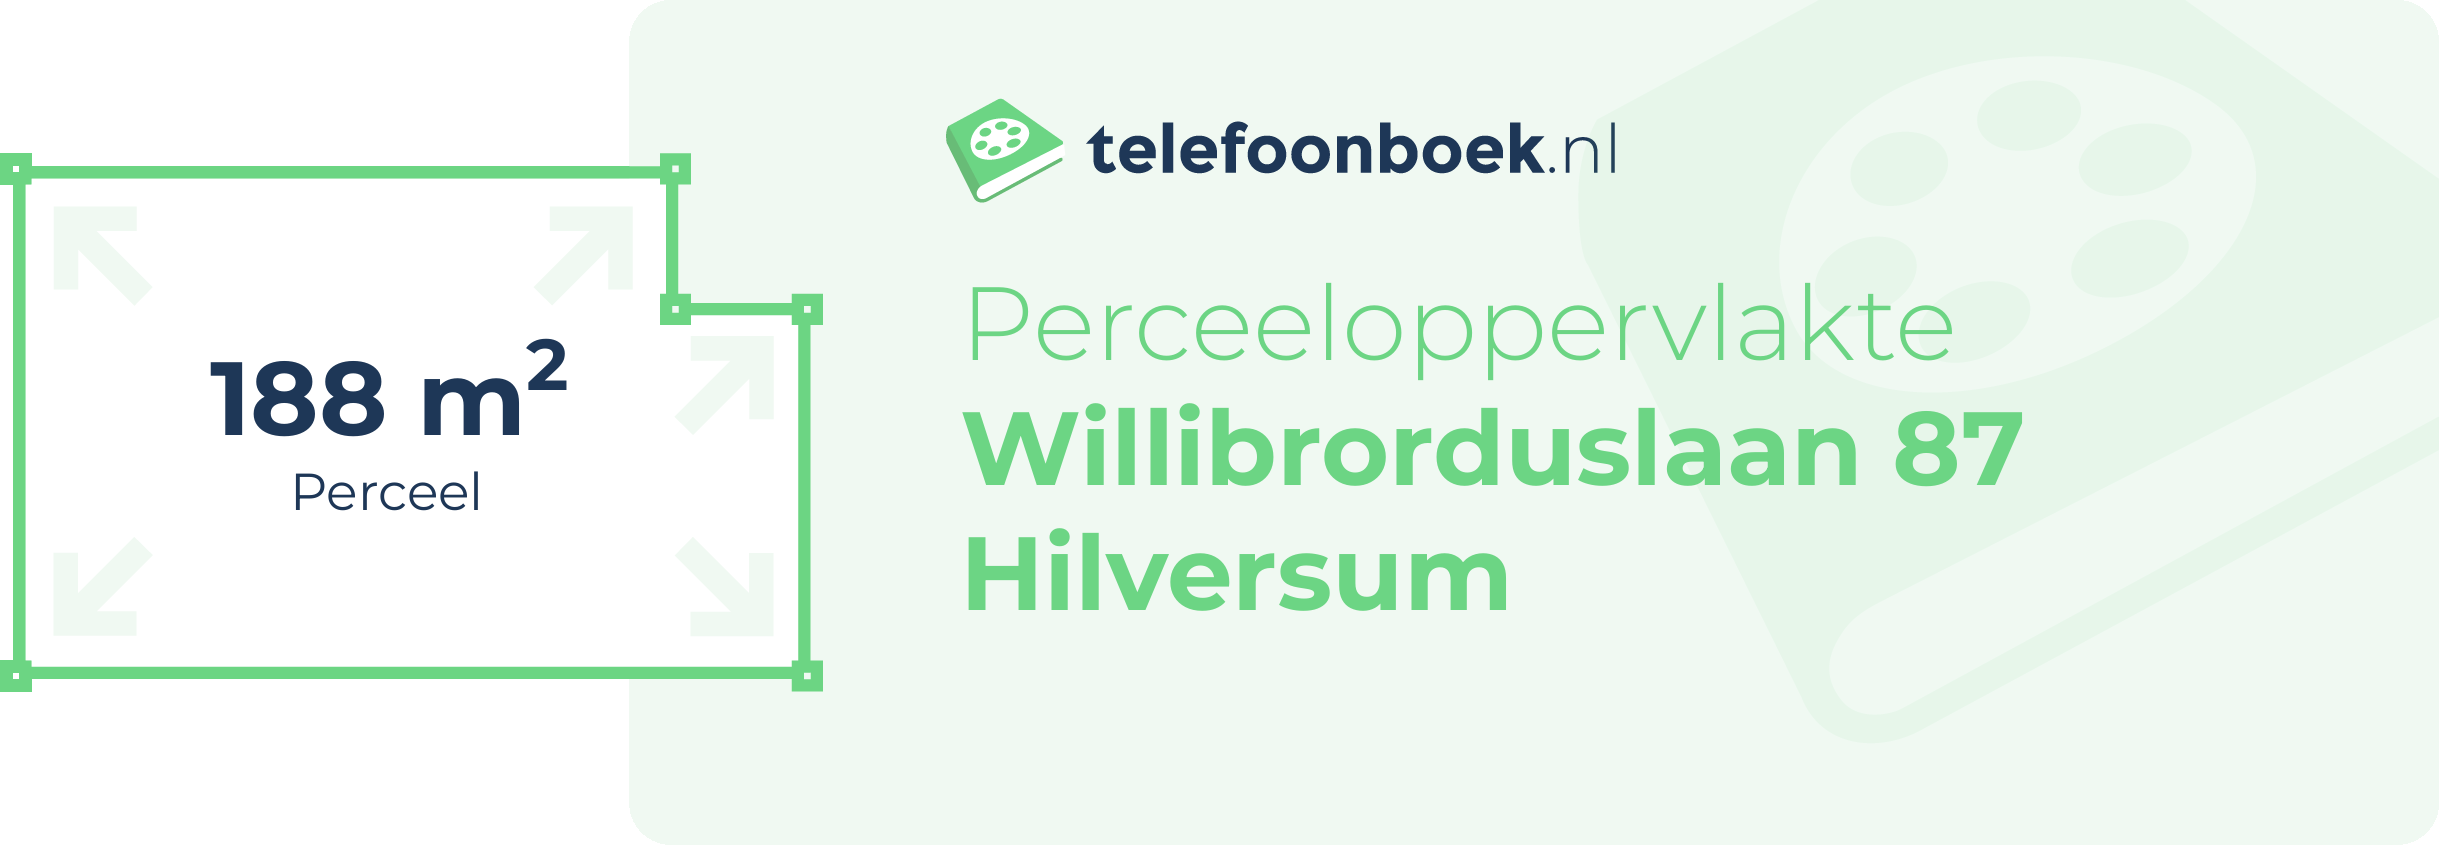 Perceeloppervlakte Willibrorduslaan 87 Hilversum